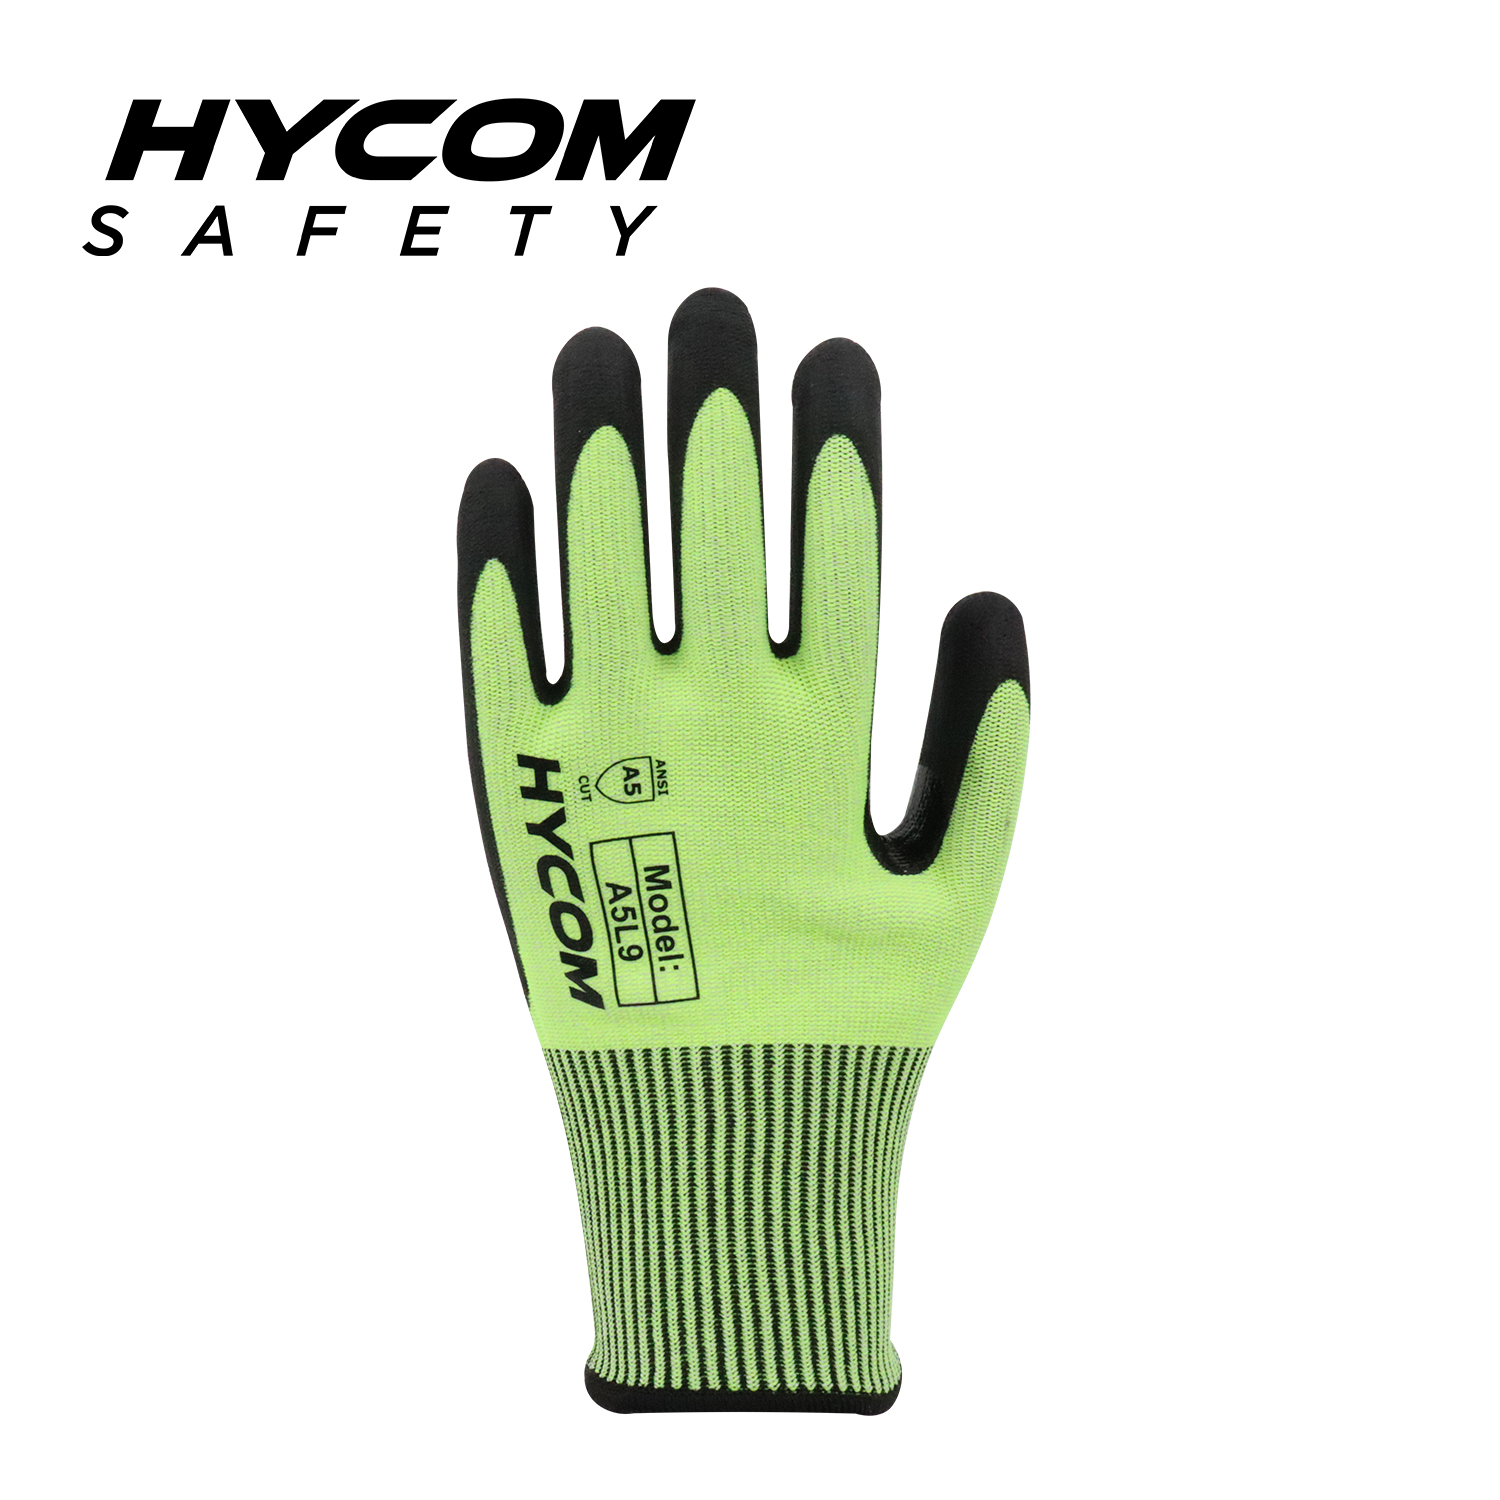 HYCOM 13G ANSI 5 Schnittfester Handschuh mit Handflächenschaum-Nitrilbeschichtung. PSA-Handschuhe